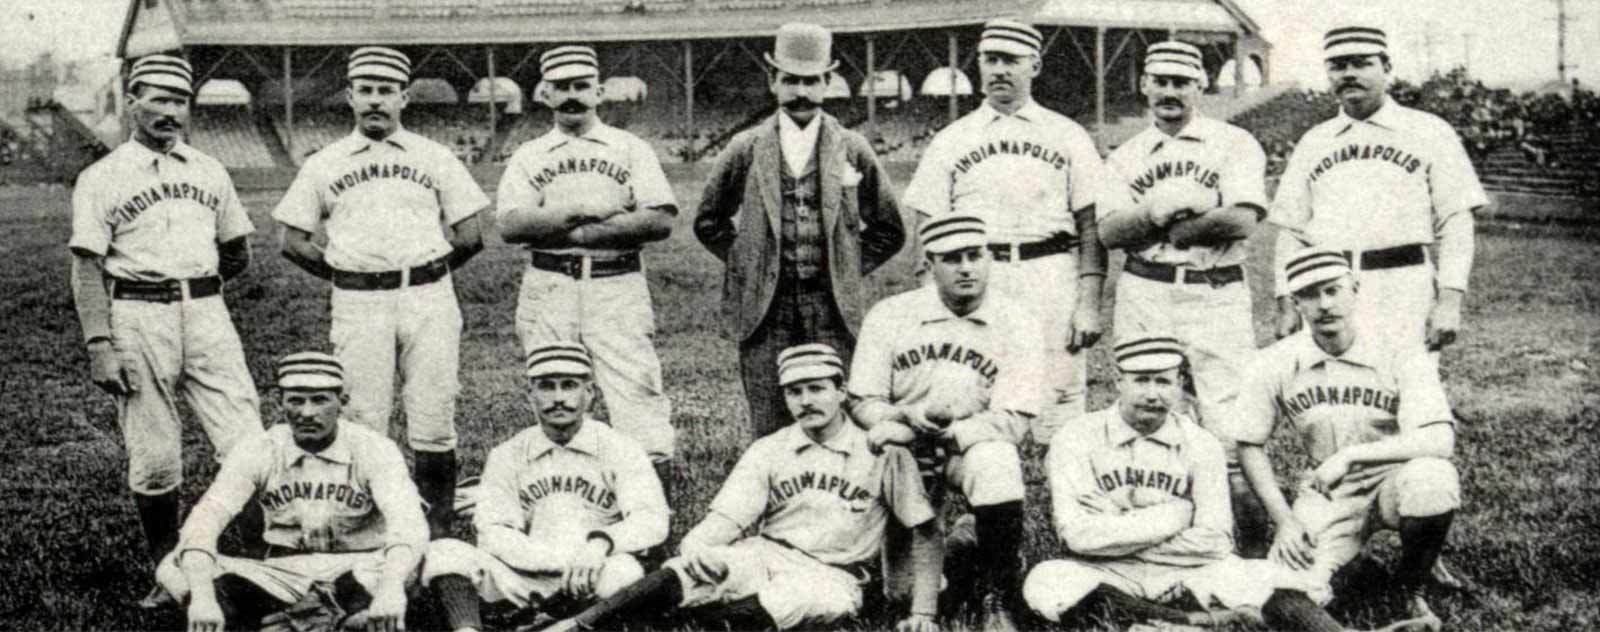 ancienne equipe baseball indianapolis